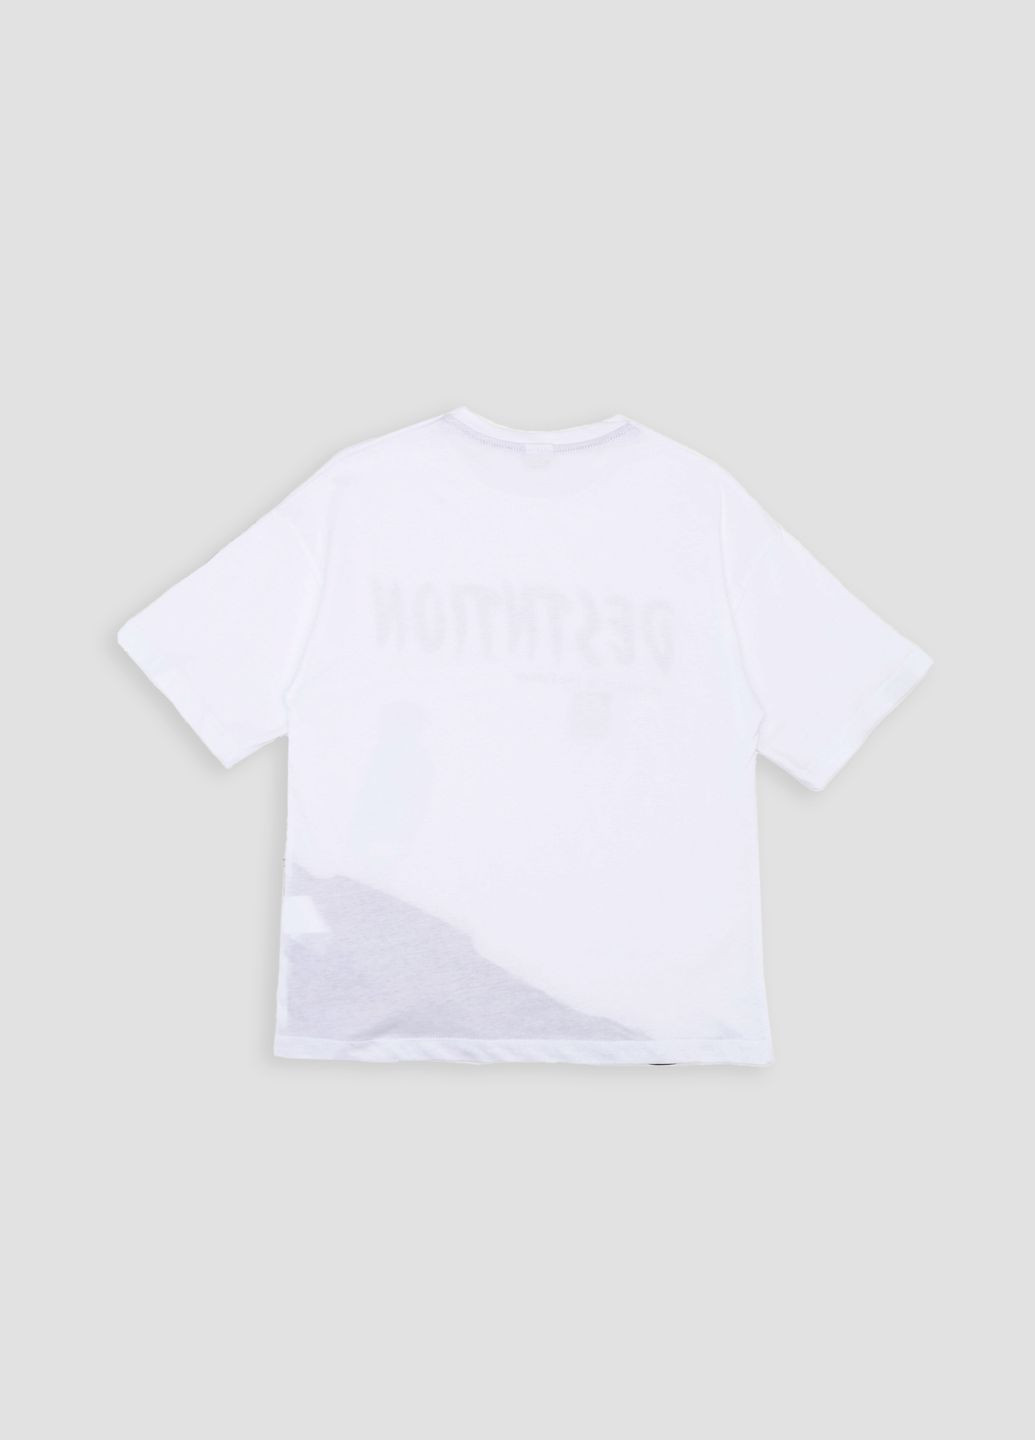 Белая летняя футболка с коротким рукавом для мальчика цвет белый цб-00242370 Beneti